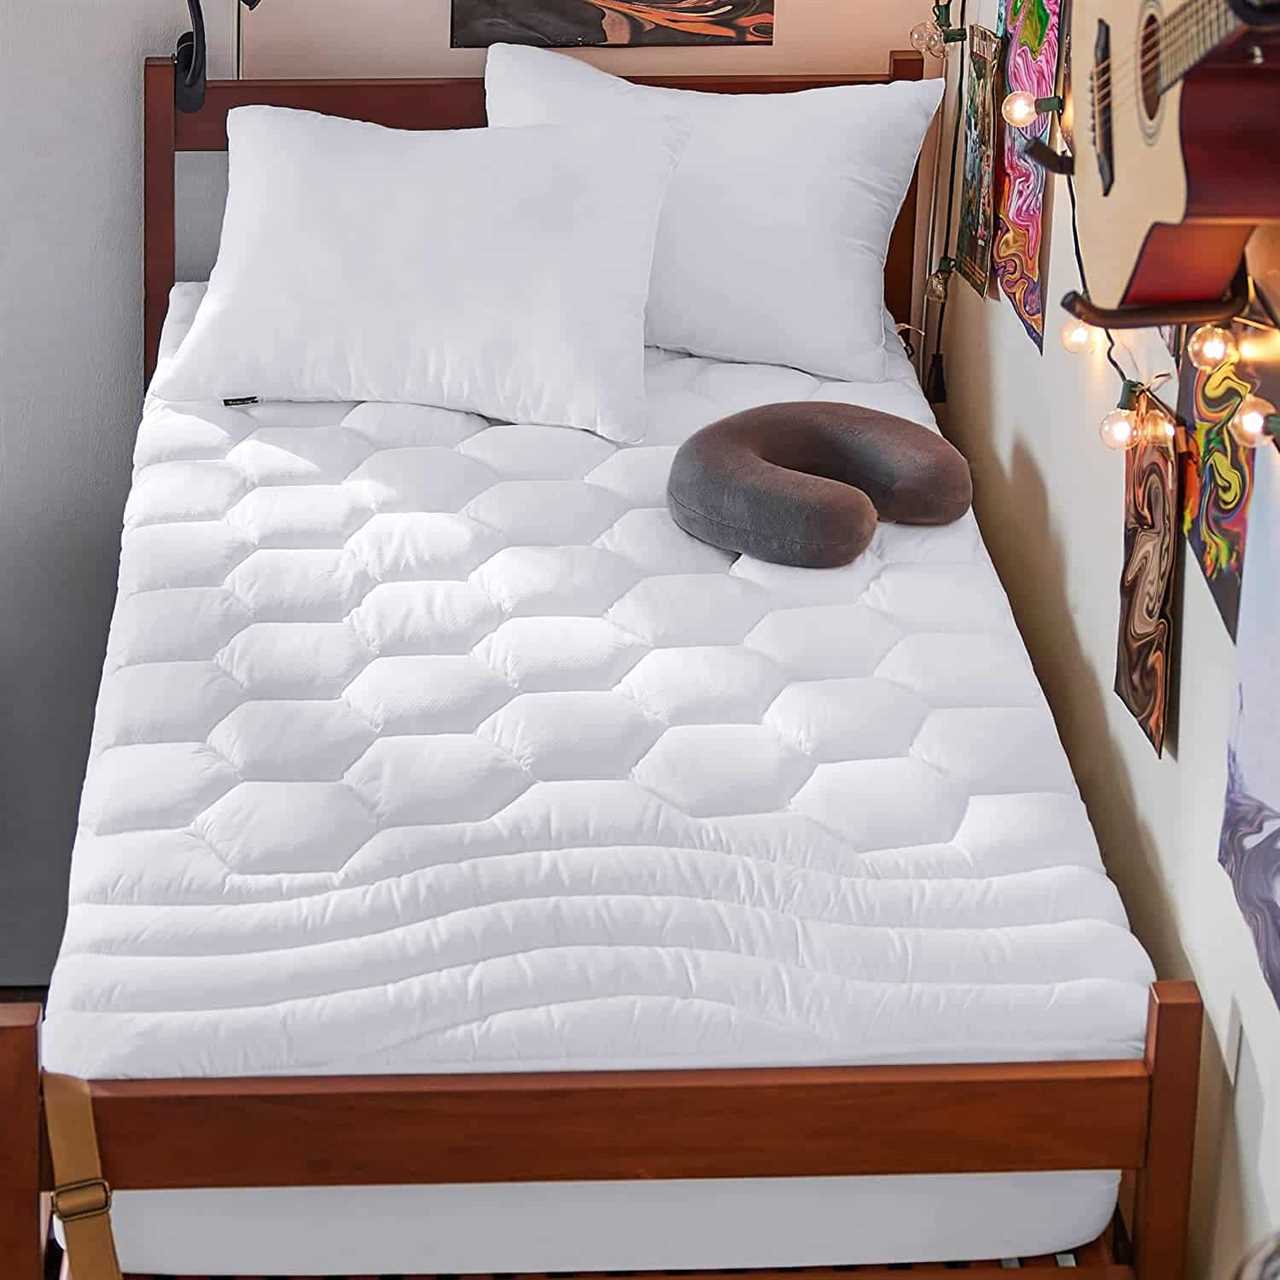 dorm room bedding: mattress topper